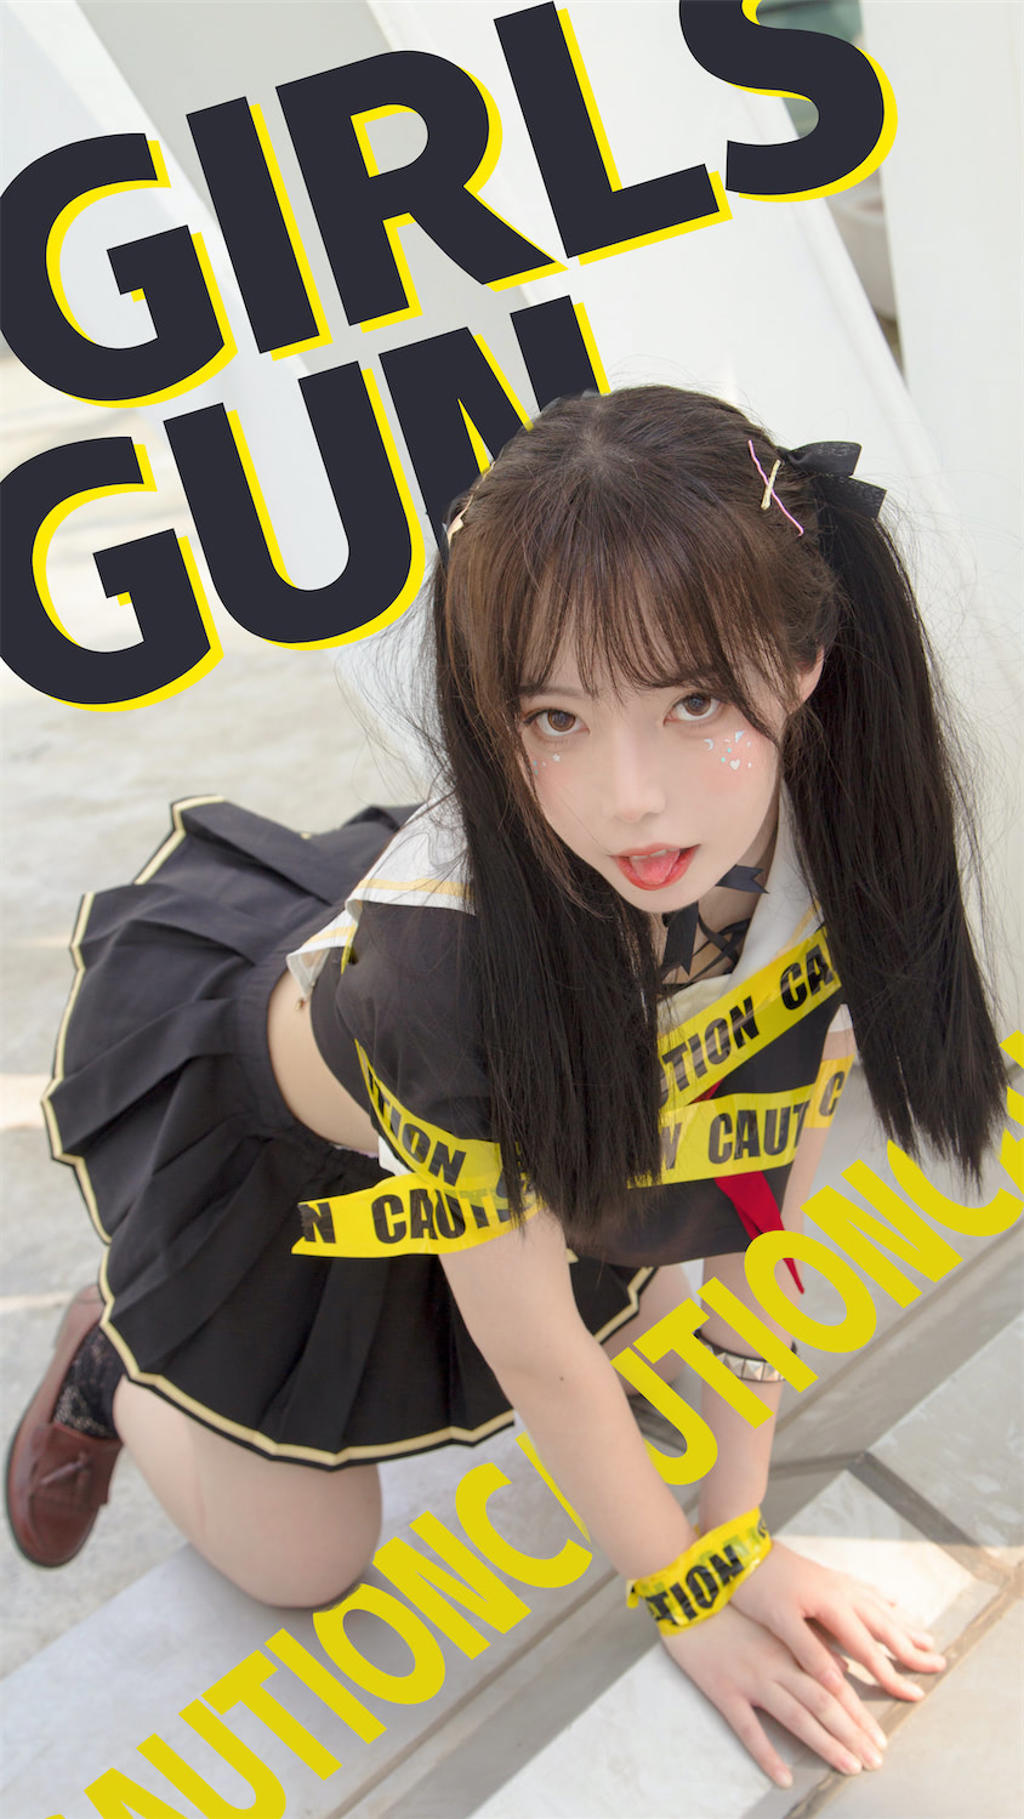 Fushii_海堂禁止GUN少女40p